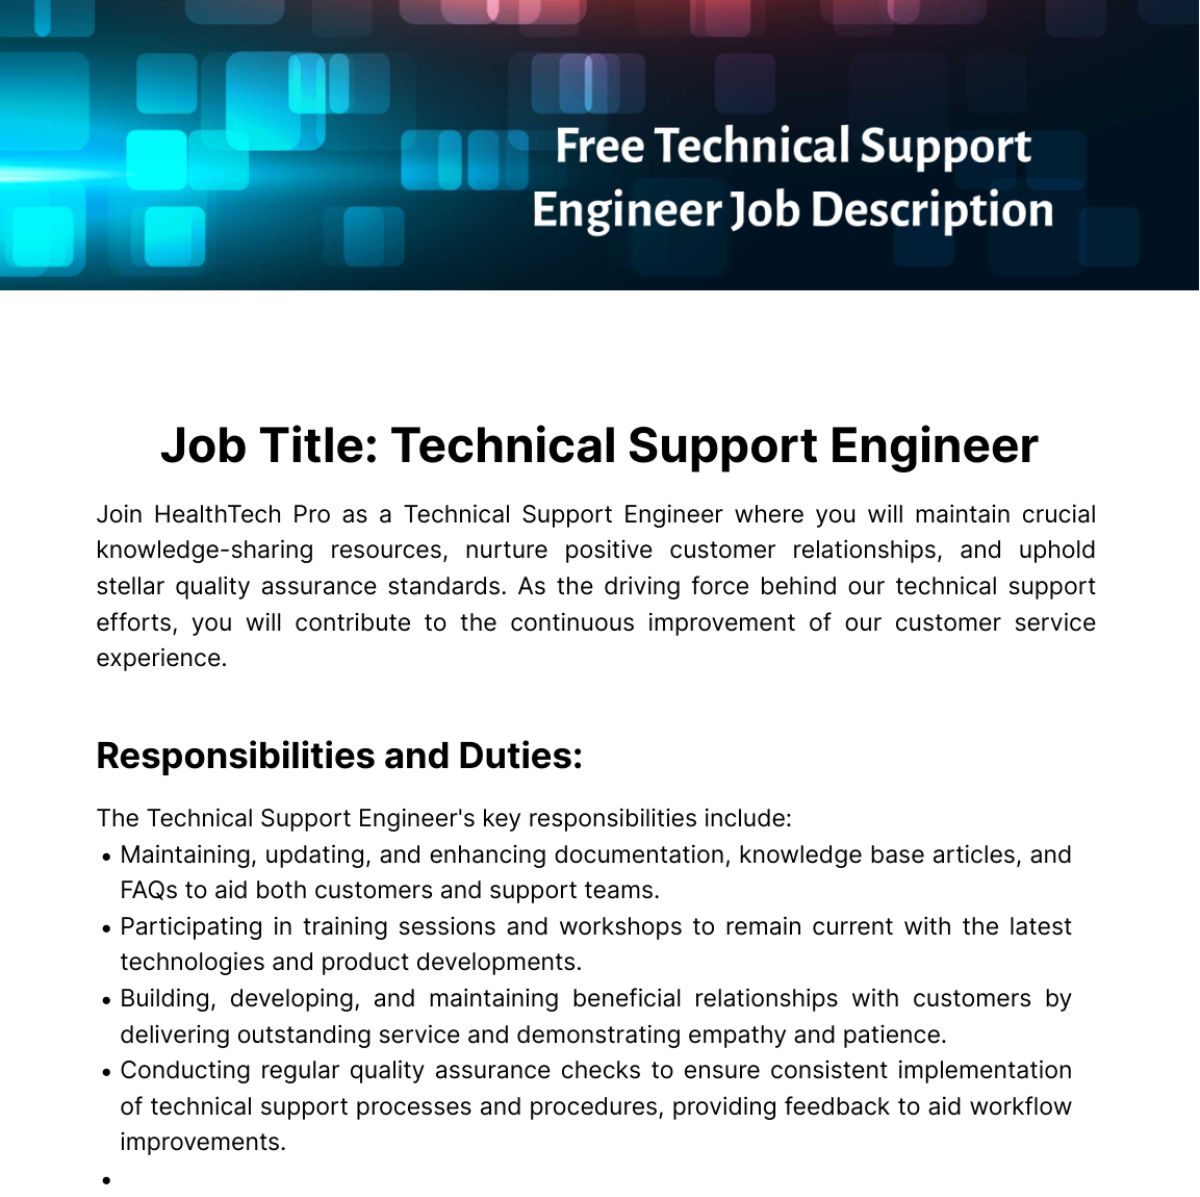 Free Technical Support Engineer Job Description Template